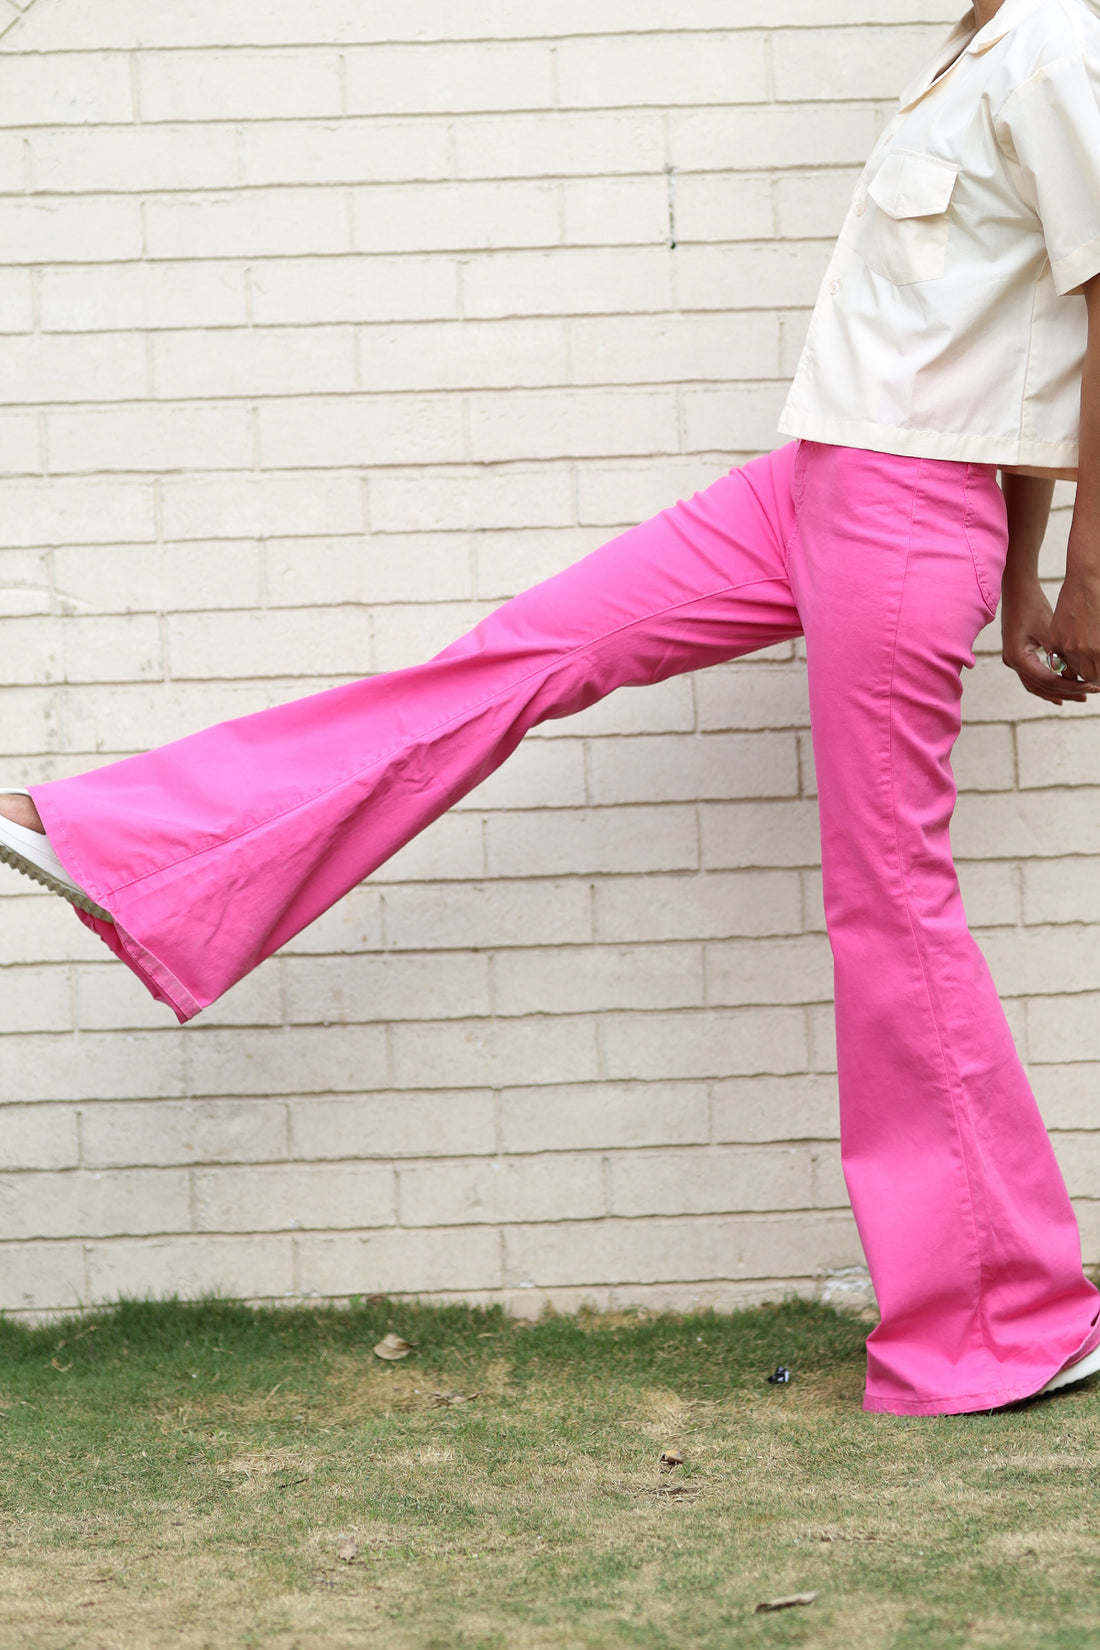 Kiyara flared boot cut Jeans Hot Pink